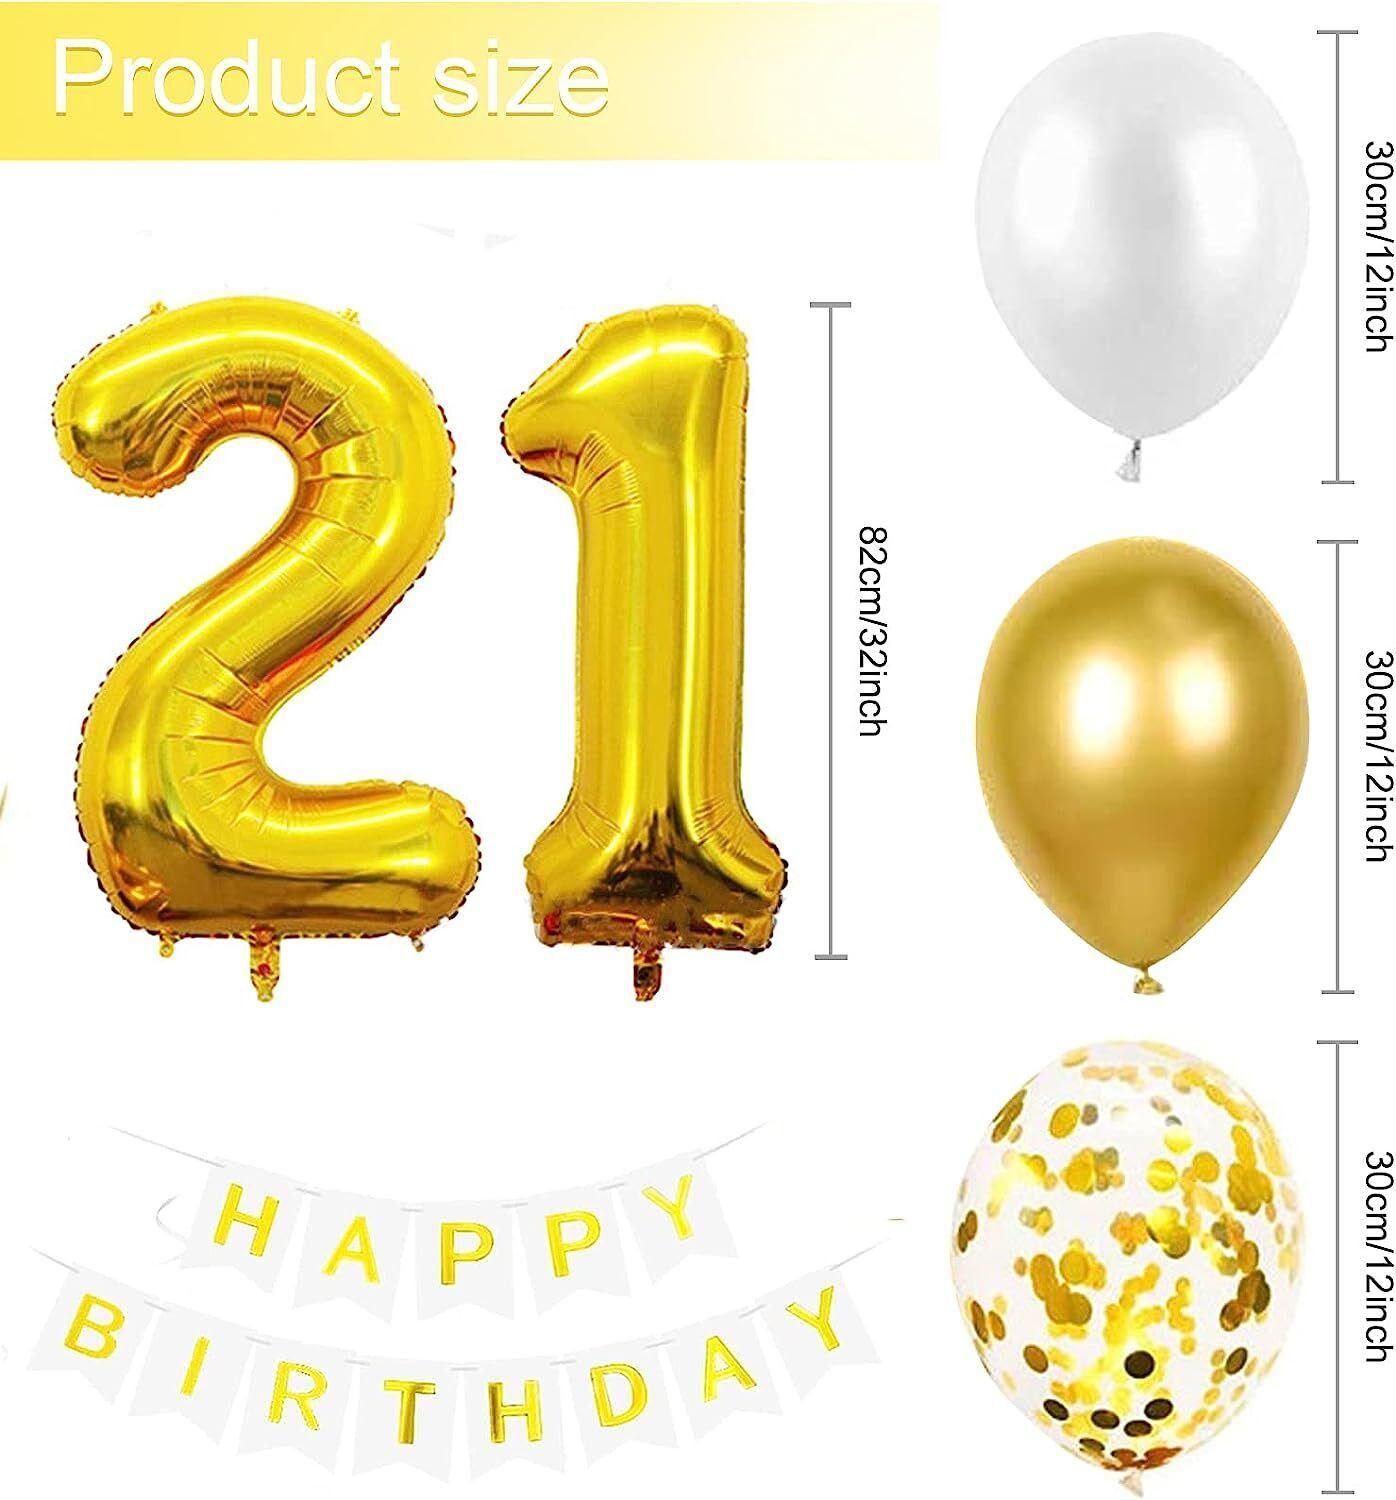 LSEEKA Gold Birthday Decorations including w/Happy Birthday Banner Confetti Ball - Massive Discounts